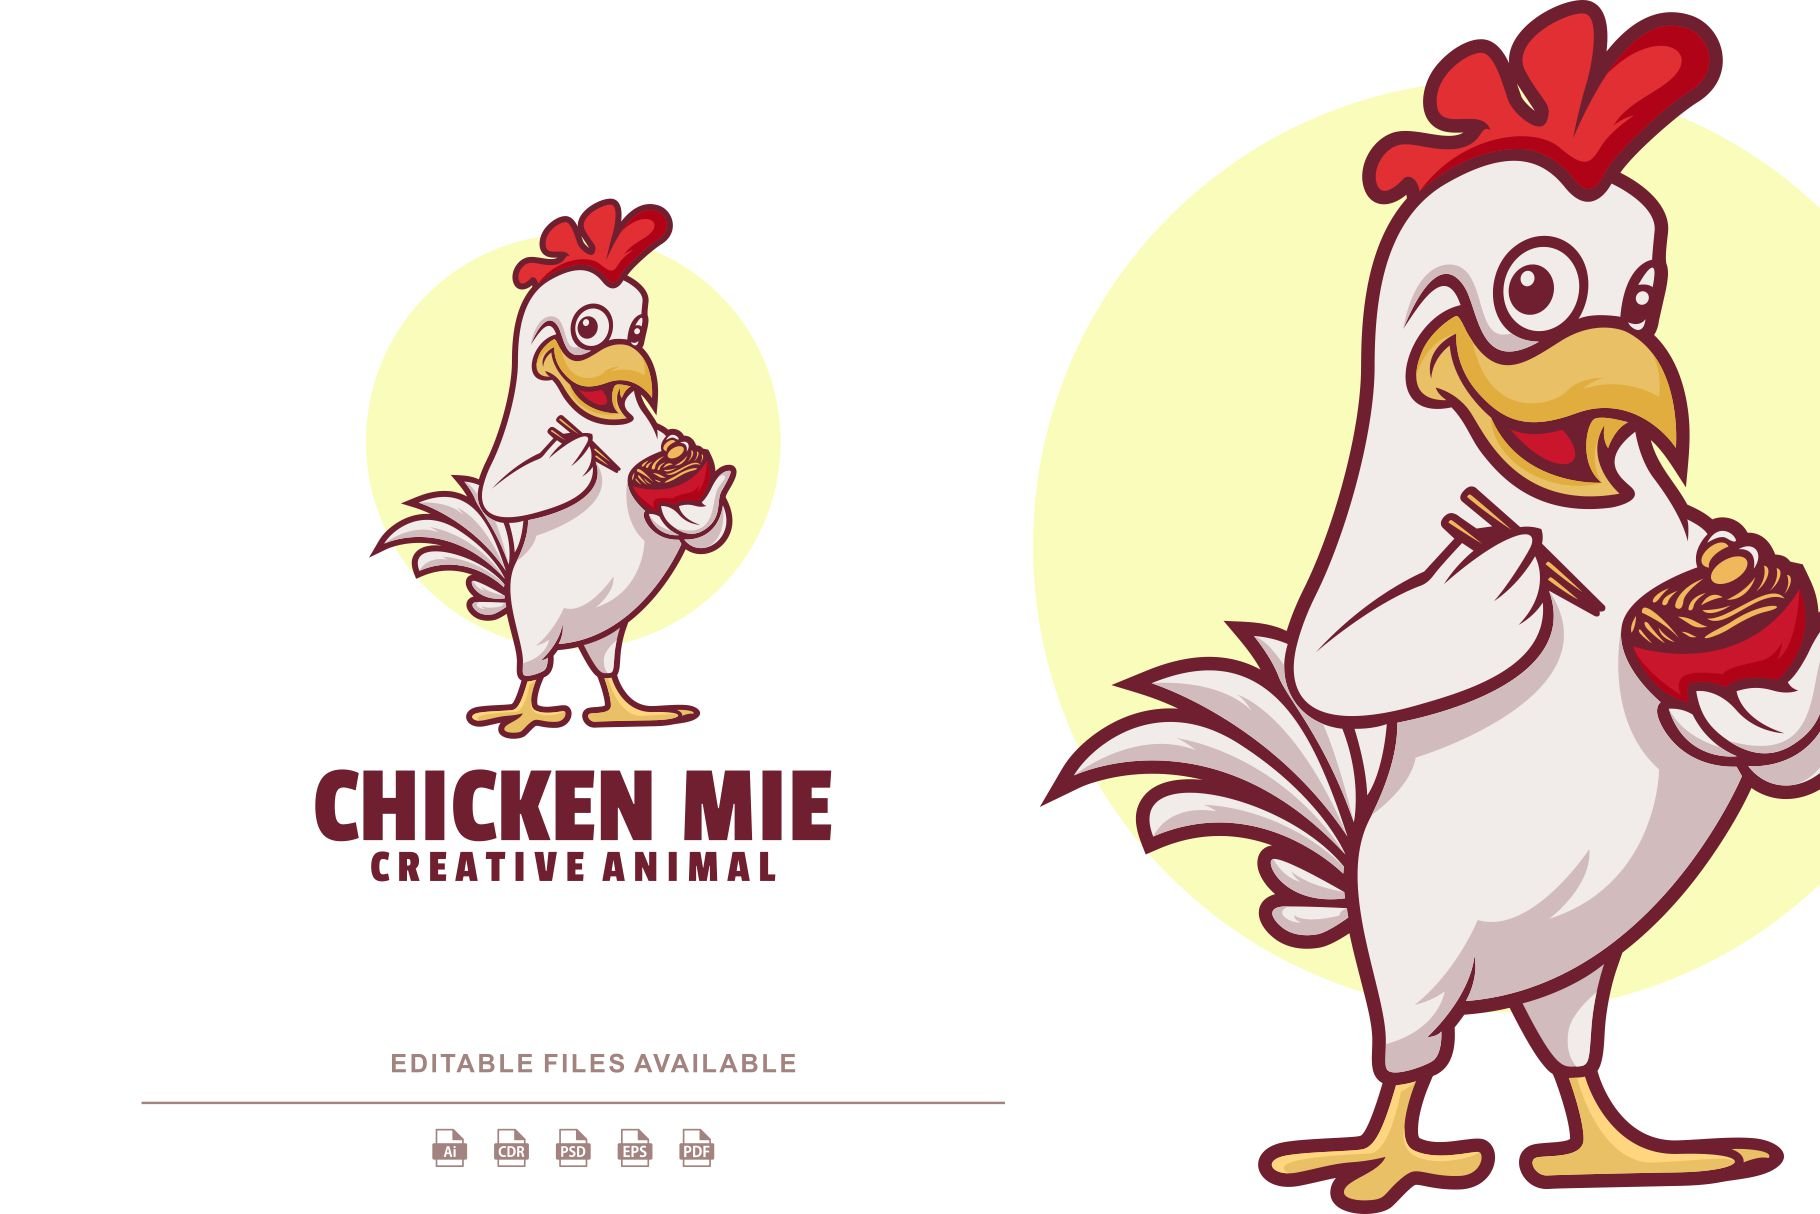 Chicken Cartoon Logo cover image.